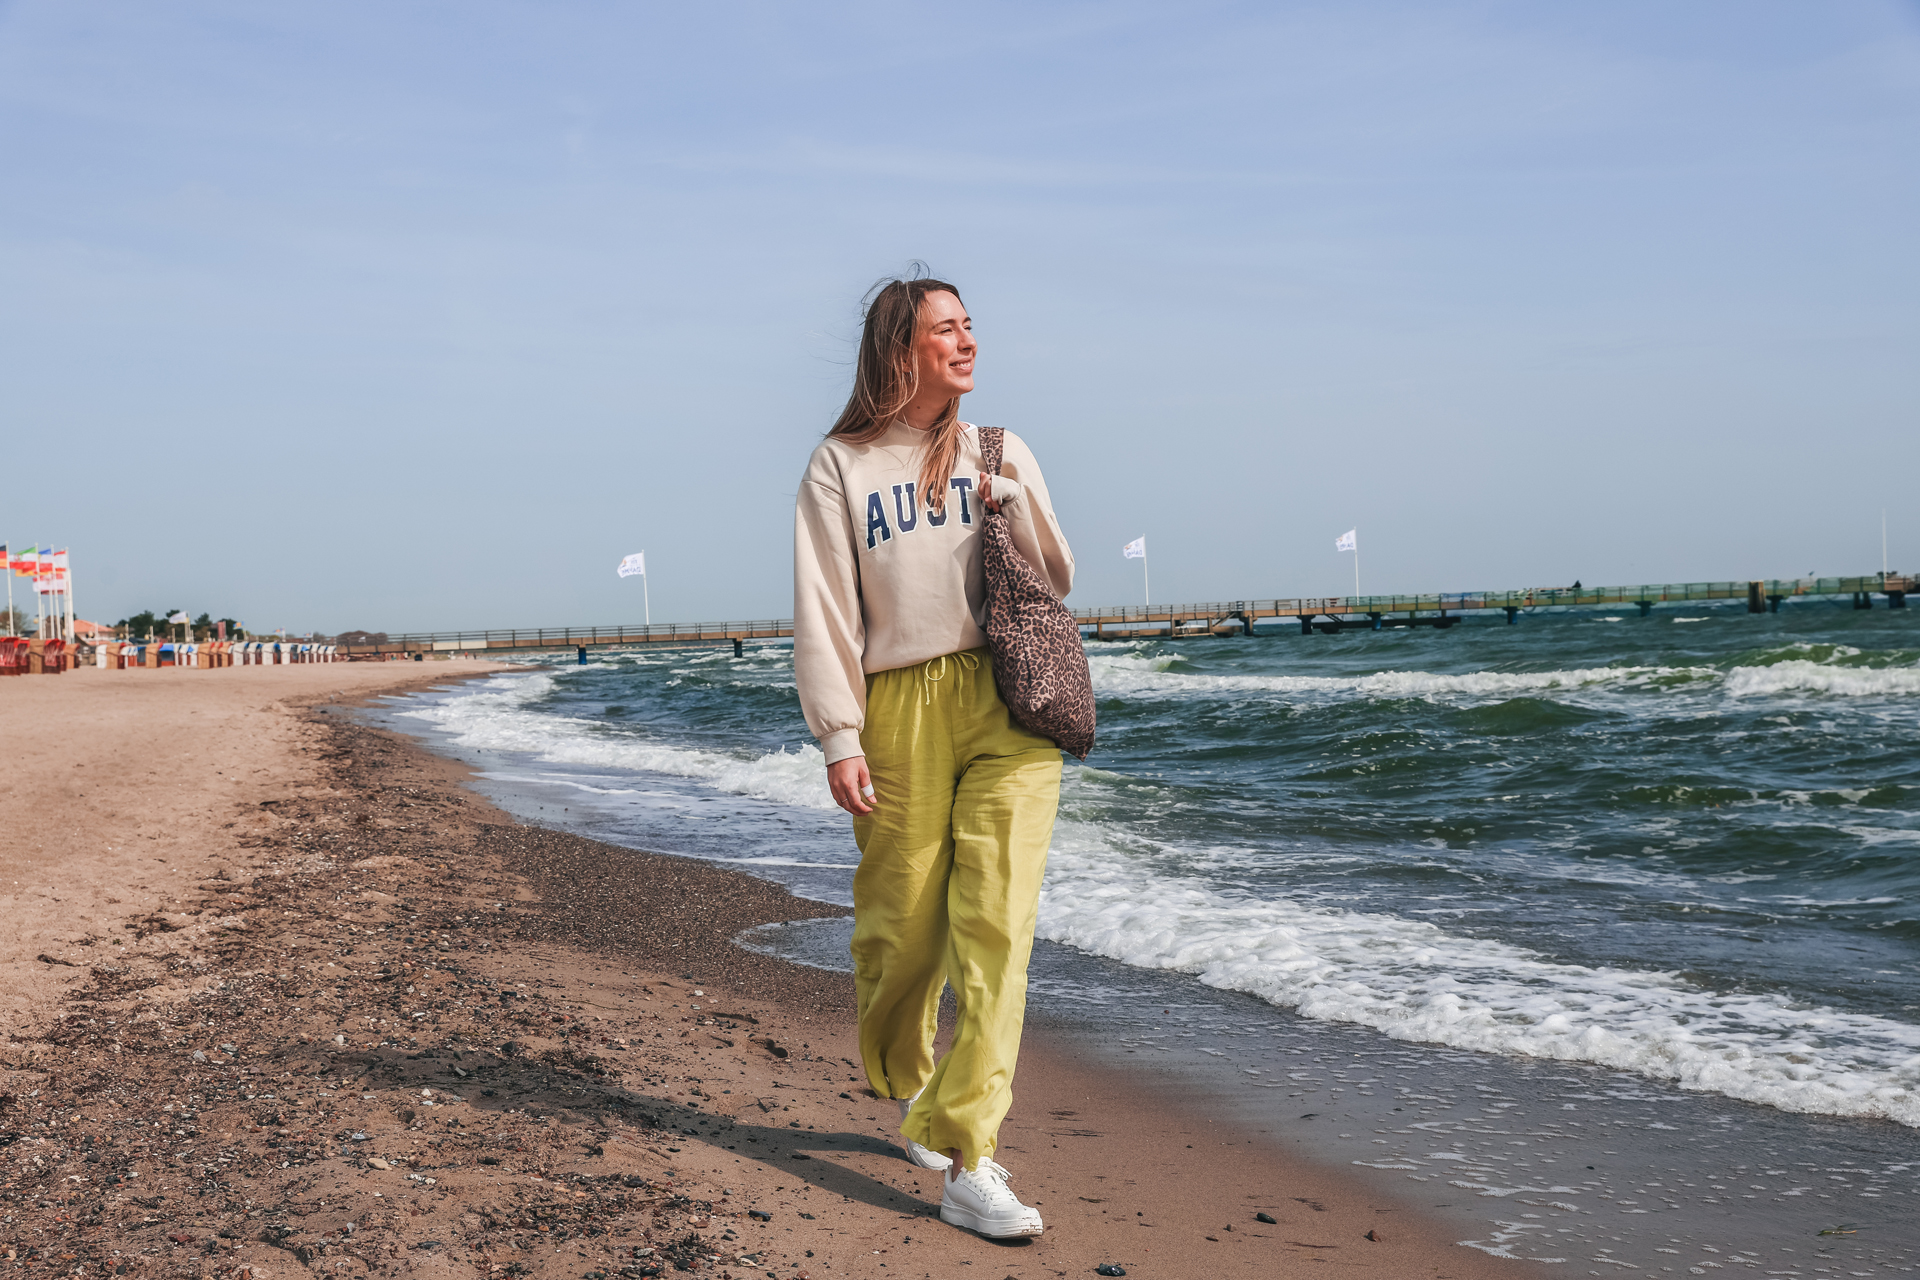 Finja spaziert am Strand von Dahme am Meer entlang